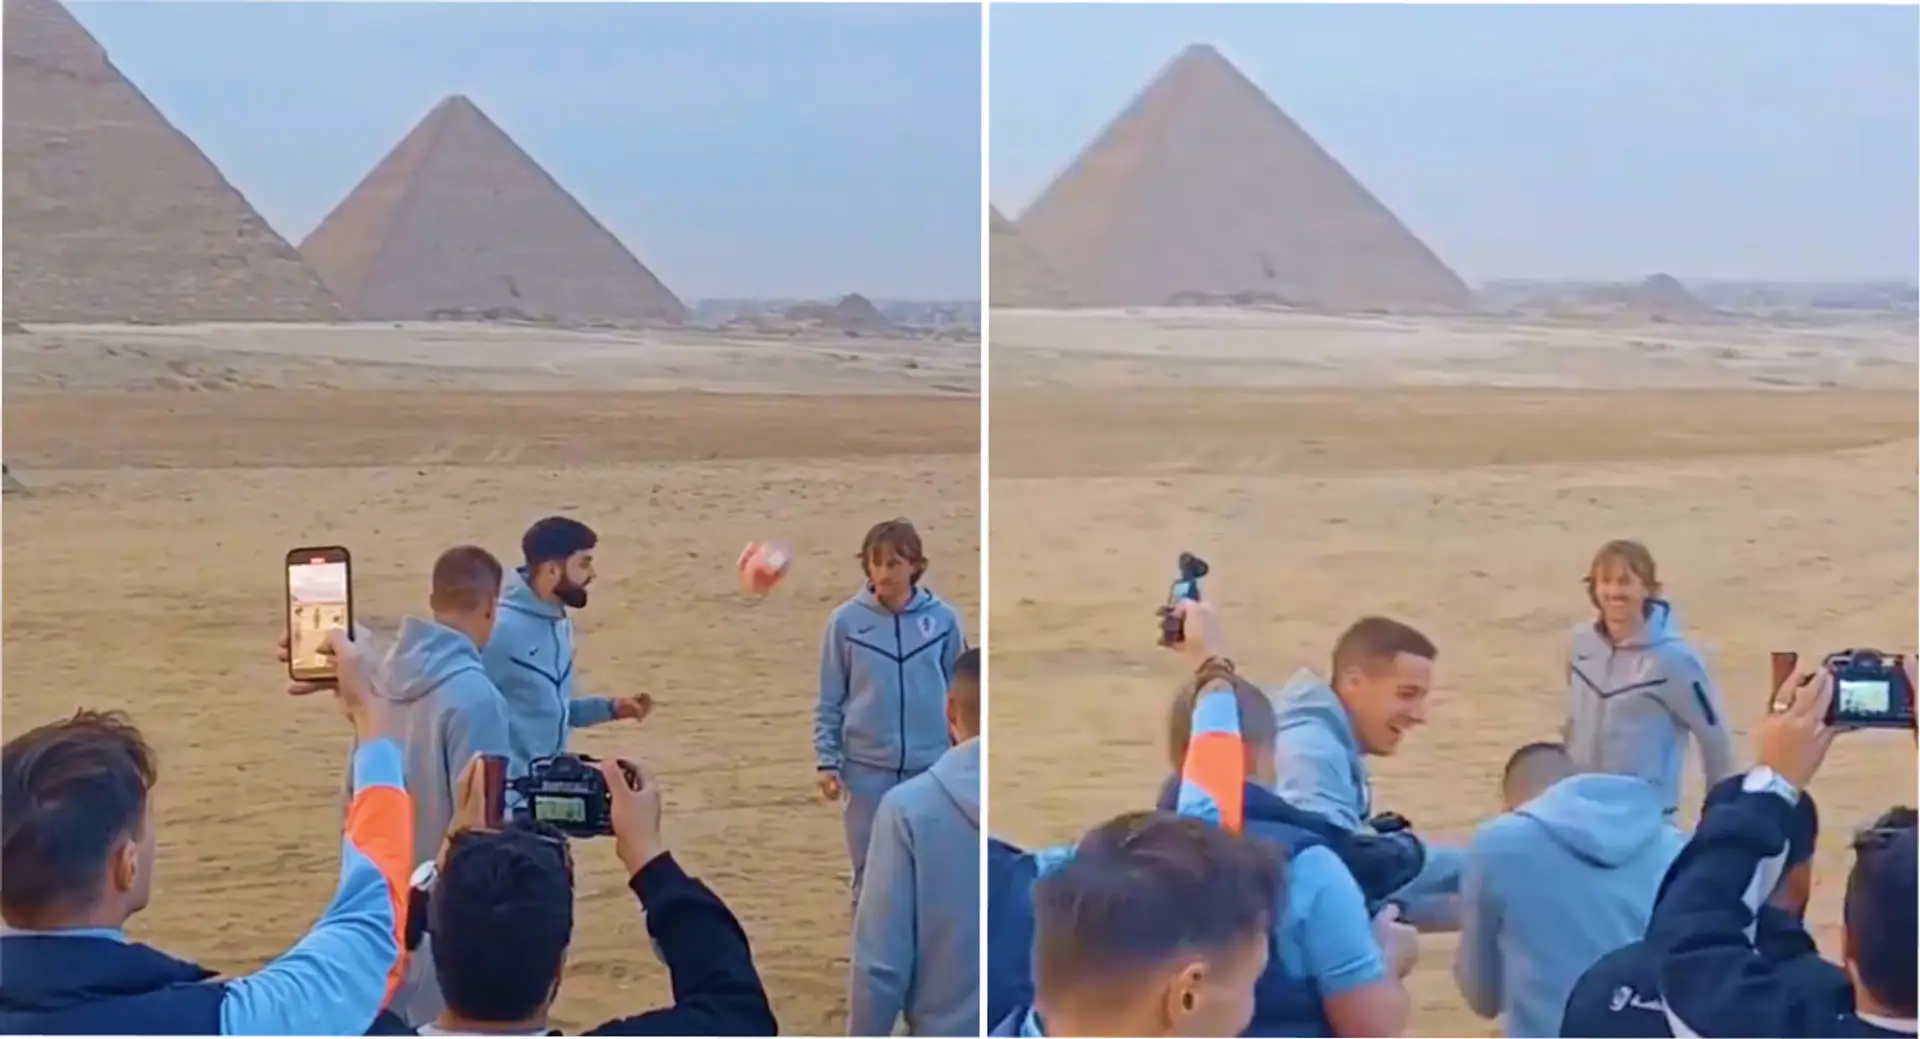 Luka Modric casually kicking ball at the Pyramids of Giza with Croatian teammates — spotted